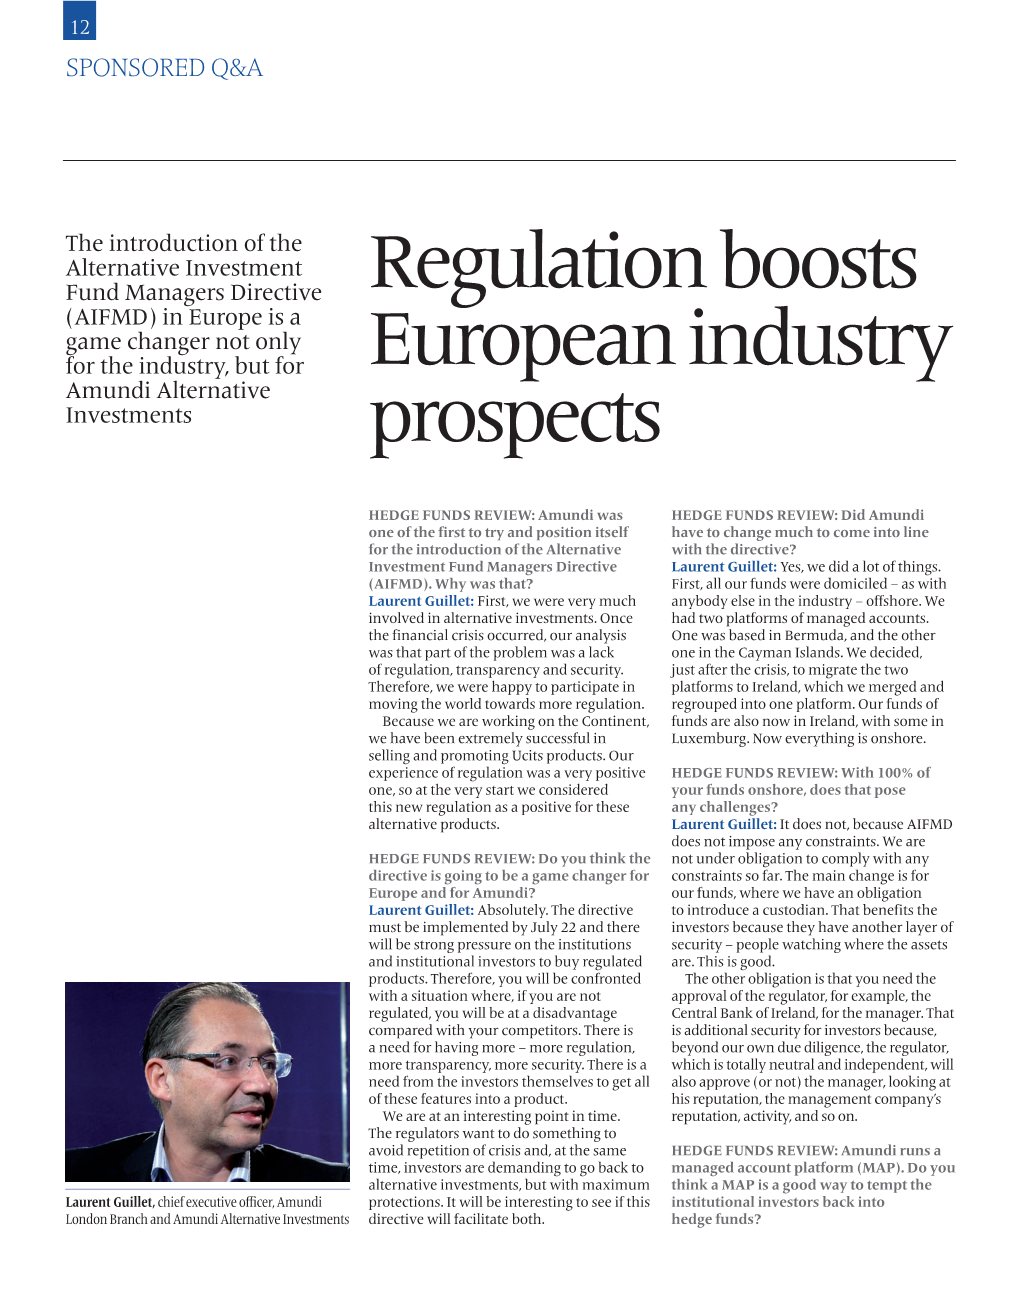 Regulation Boosts European Industry Prospects